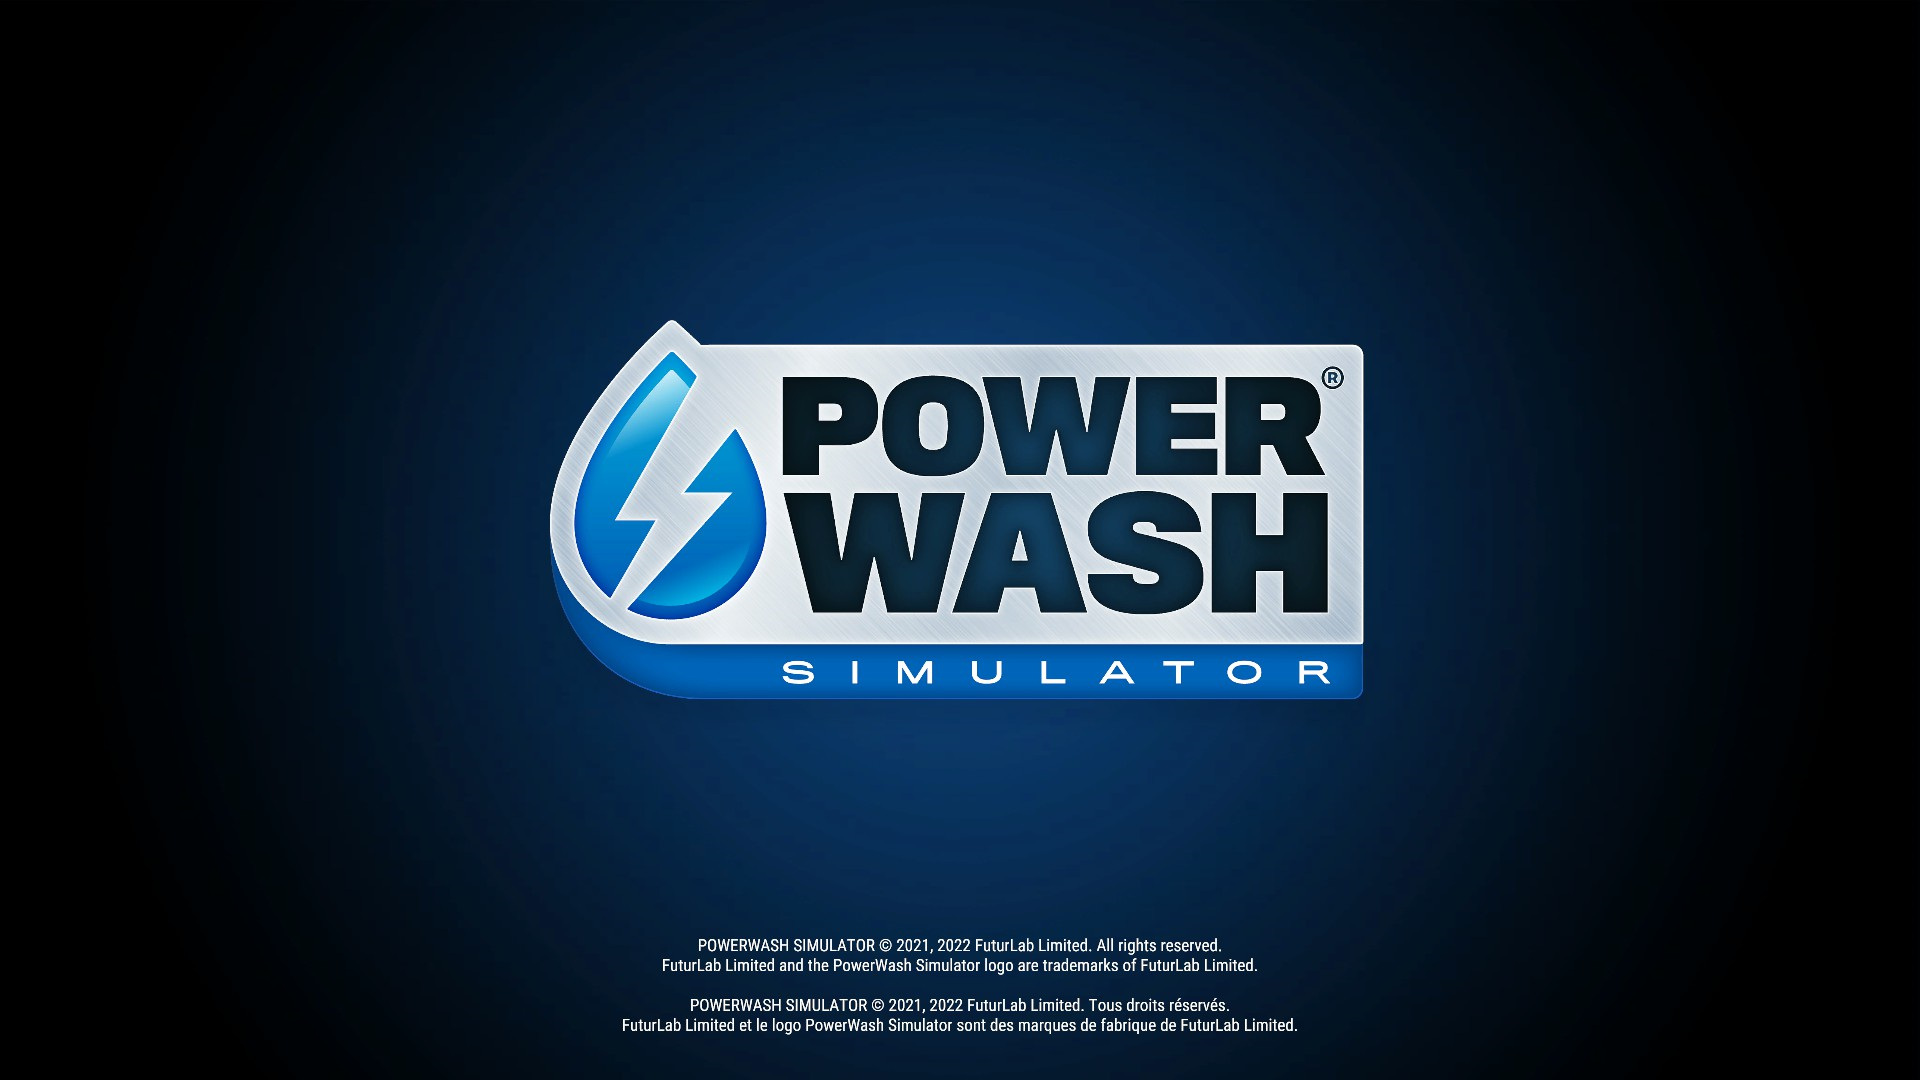 PowerWash-Simulatortop